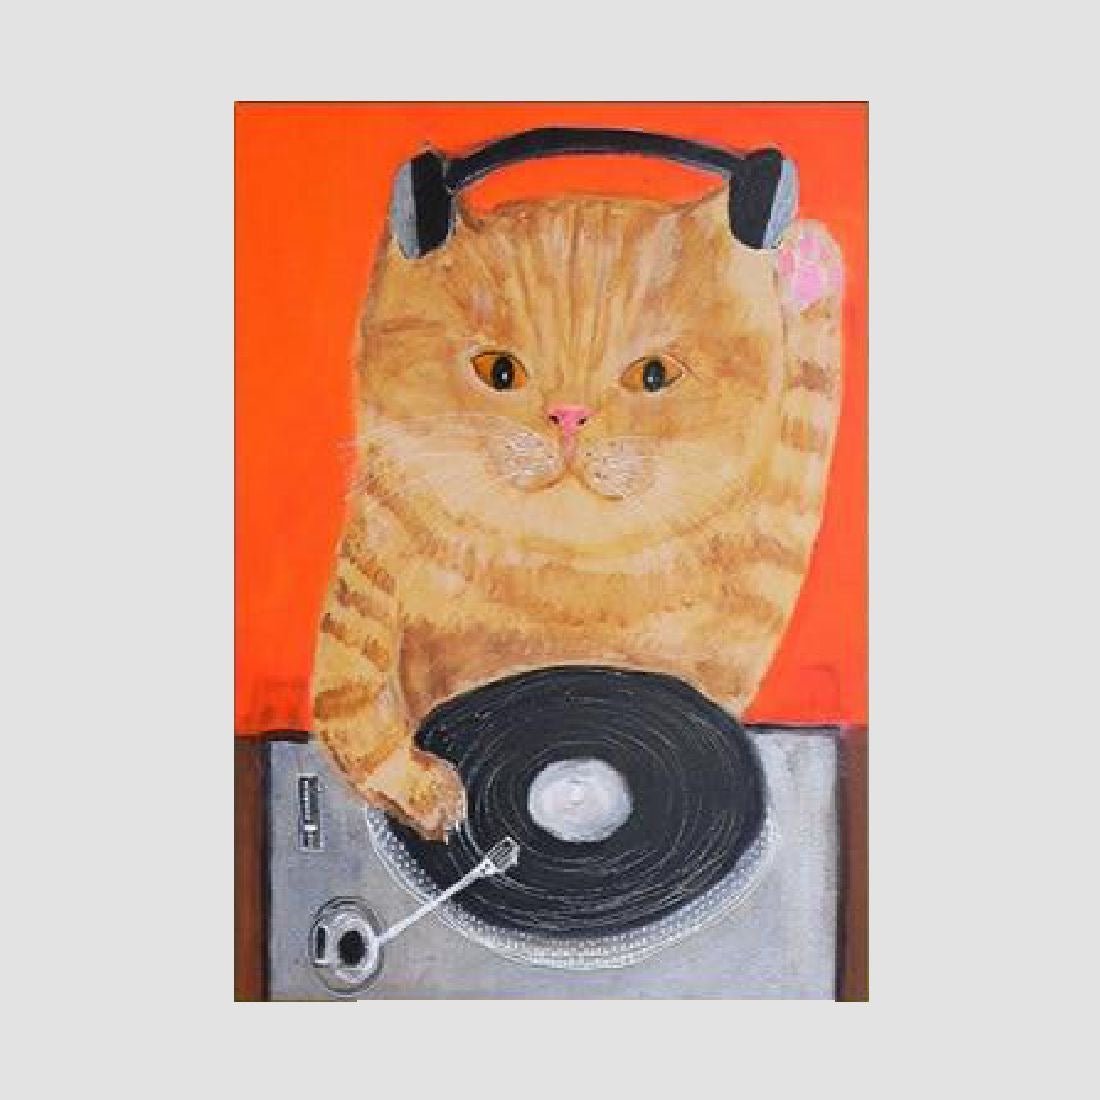 Modern Cartoon Cat Canvas Painting - CatX Fiesta